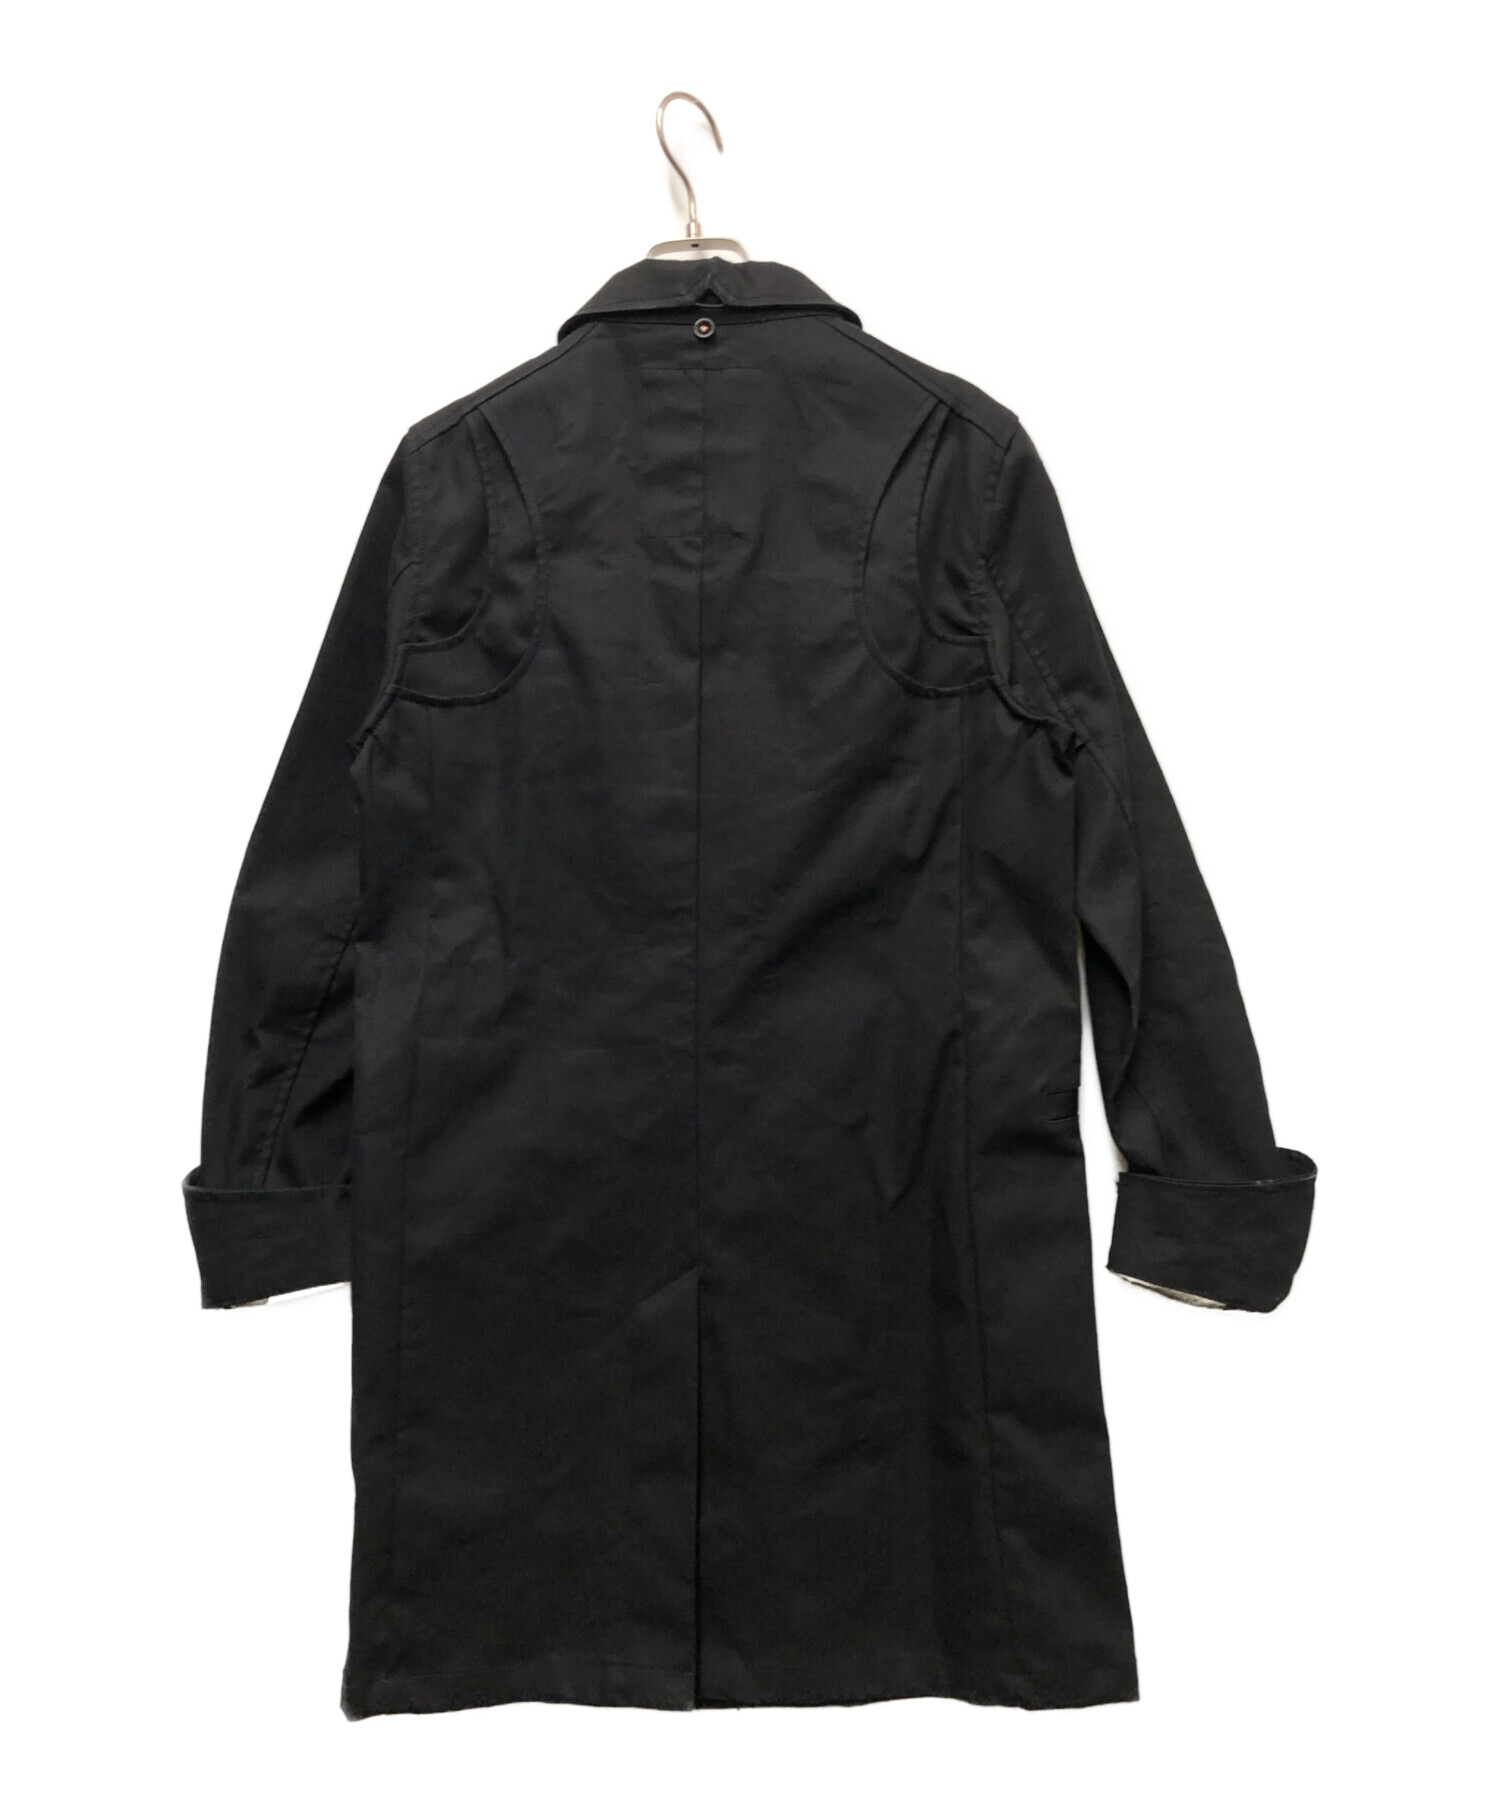 Denham (デンハム) ステンカラーコート ブラック サイズ:S 未使用品